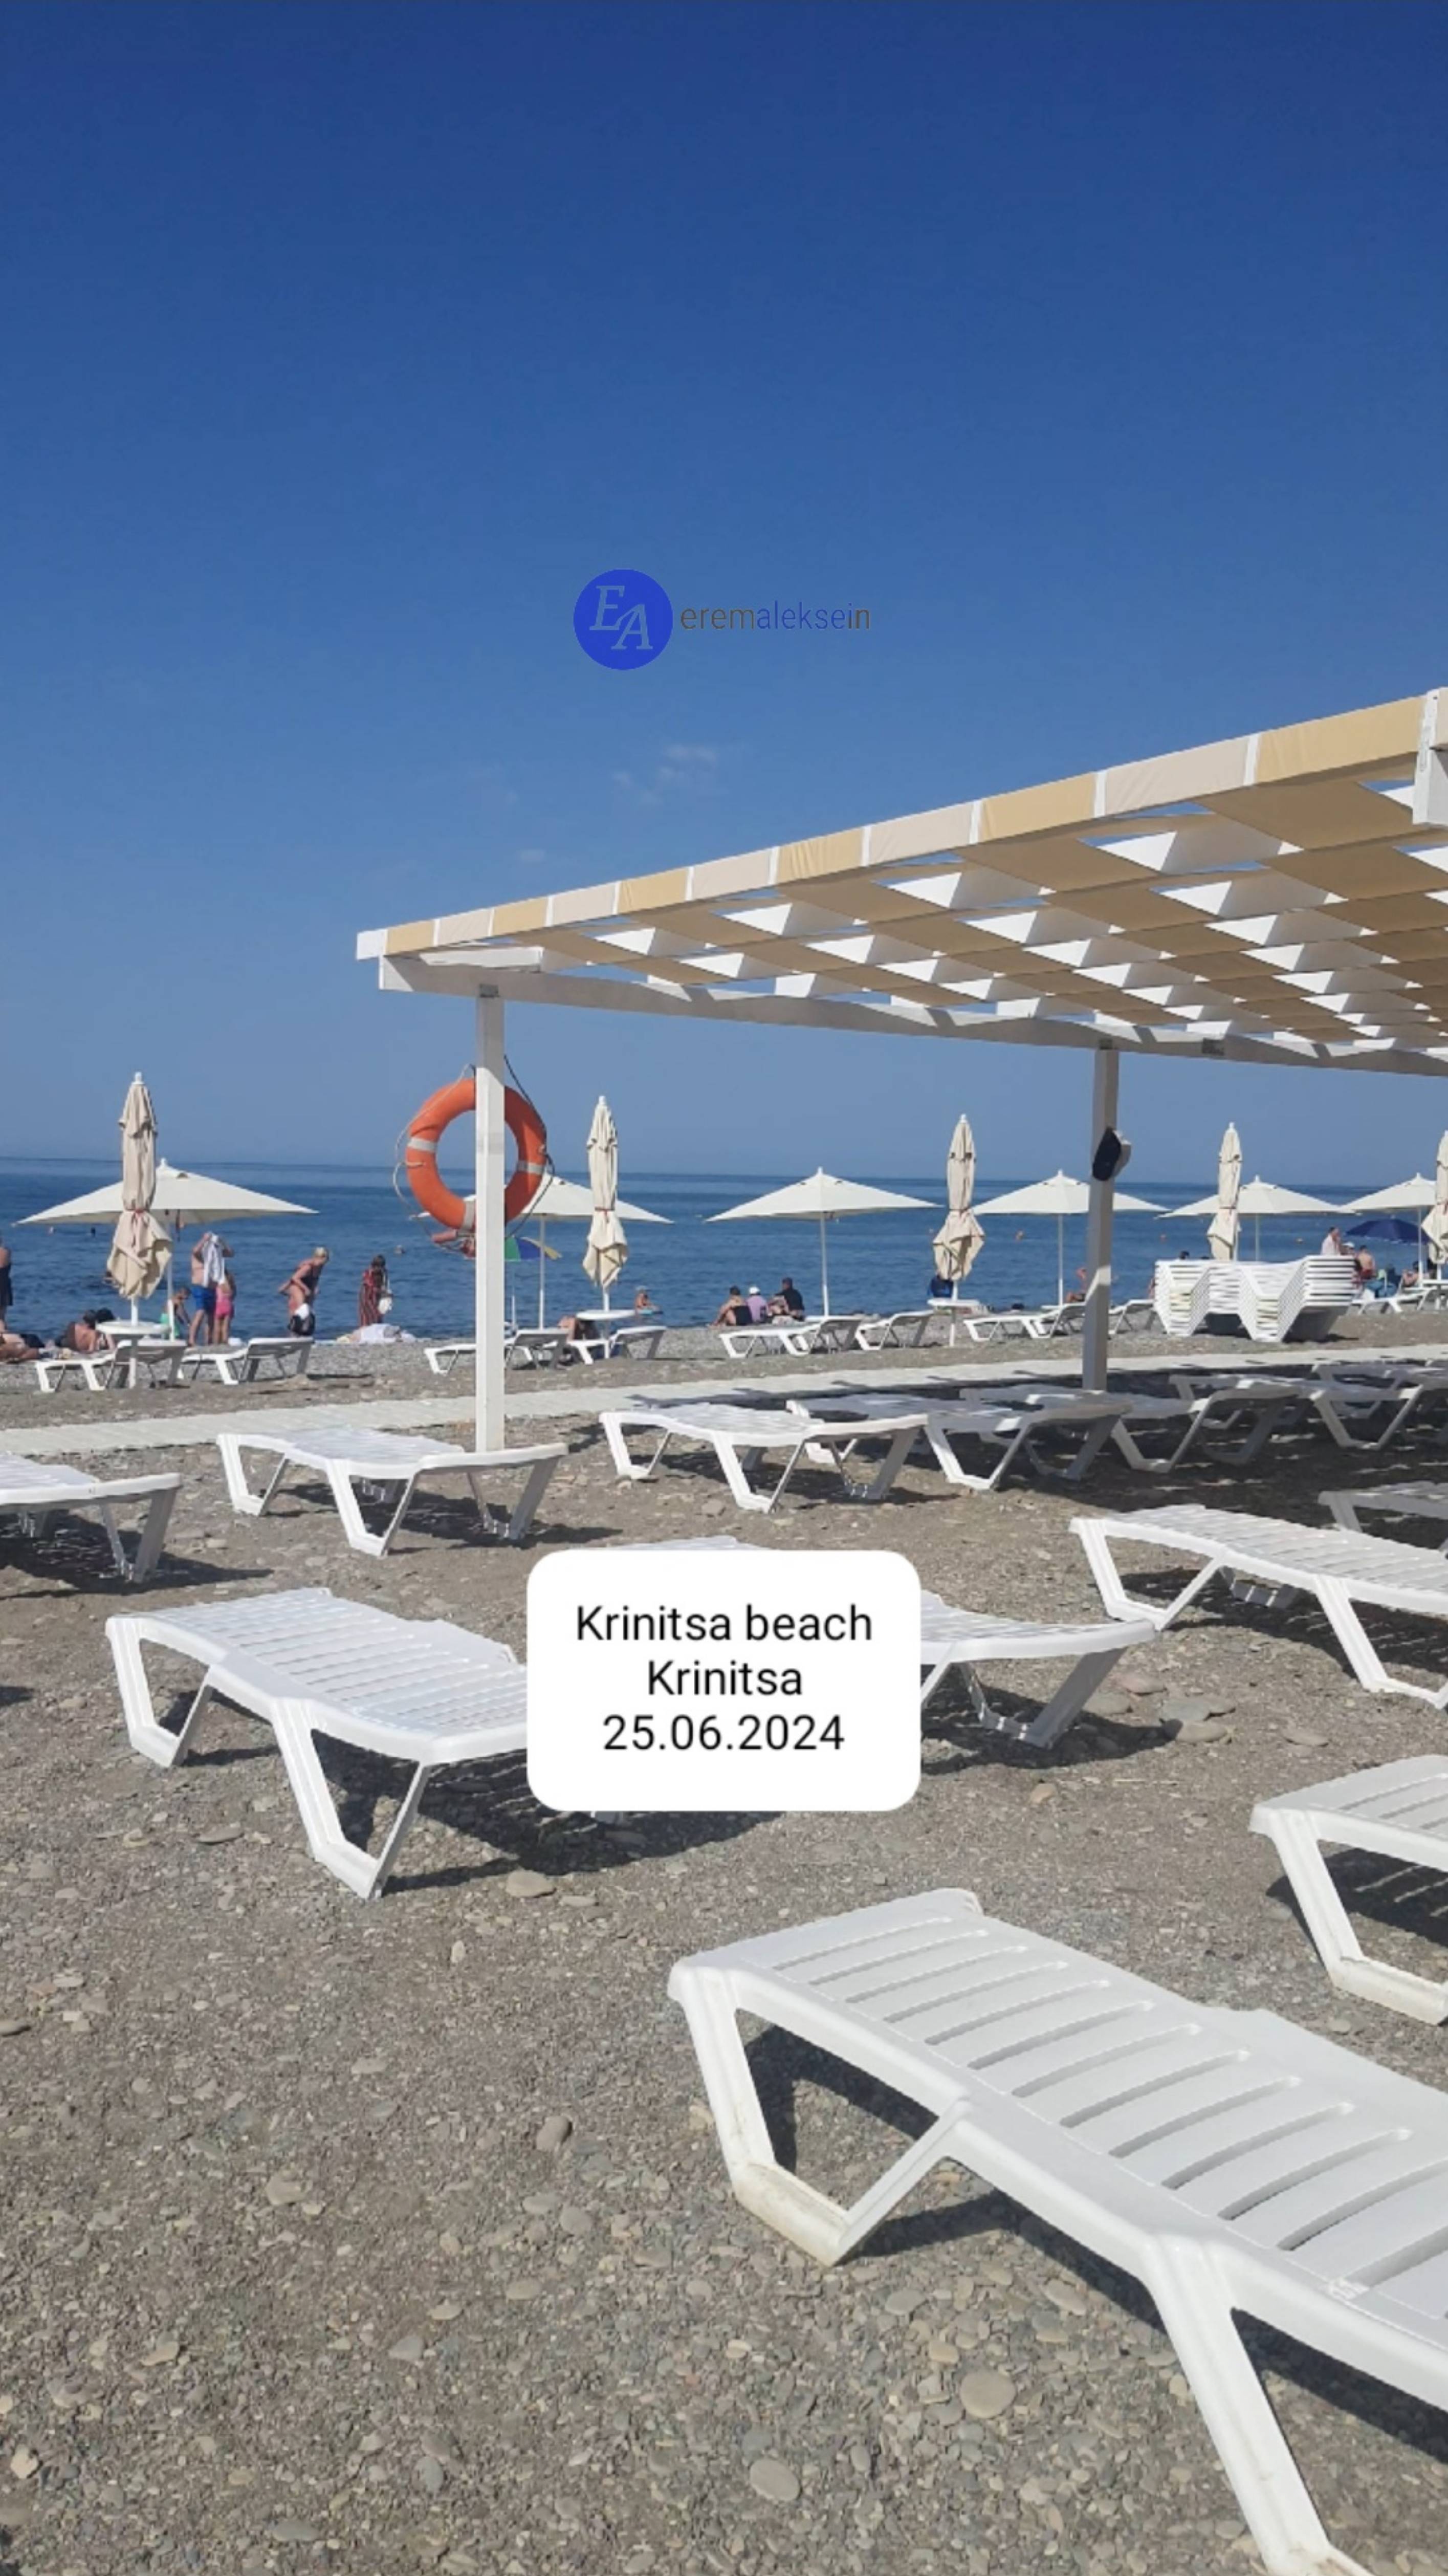 Krinitsa beach / Clip
(Пляж Криница / Ролик)